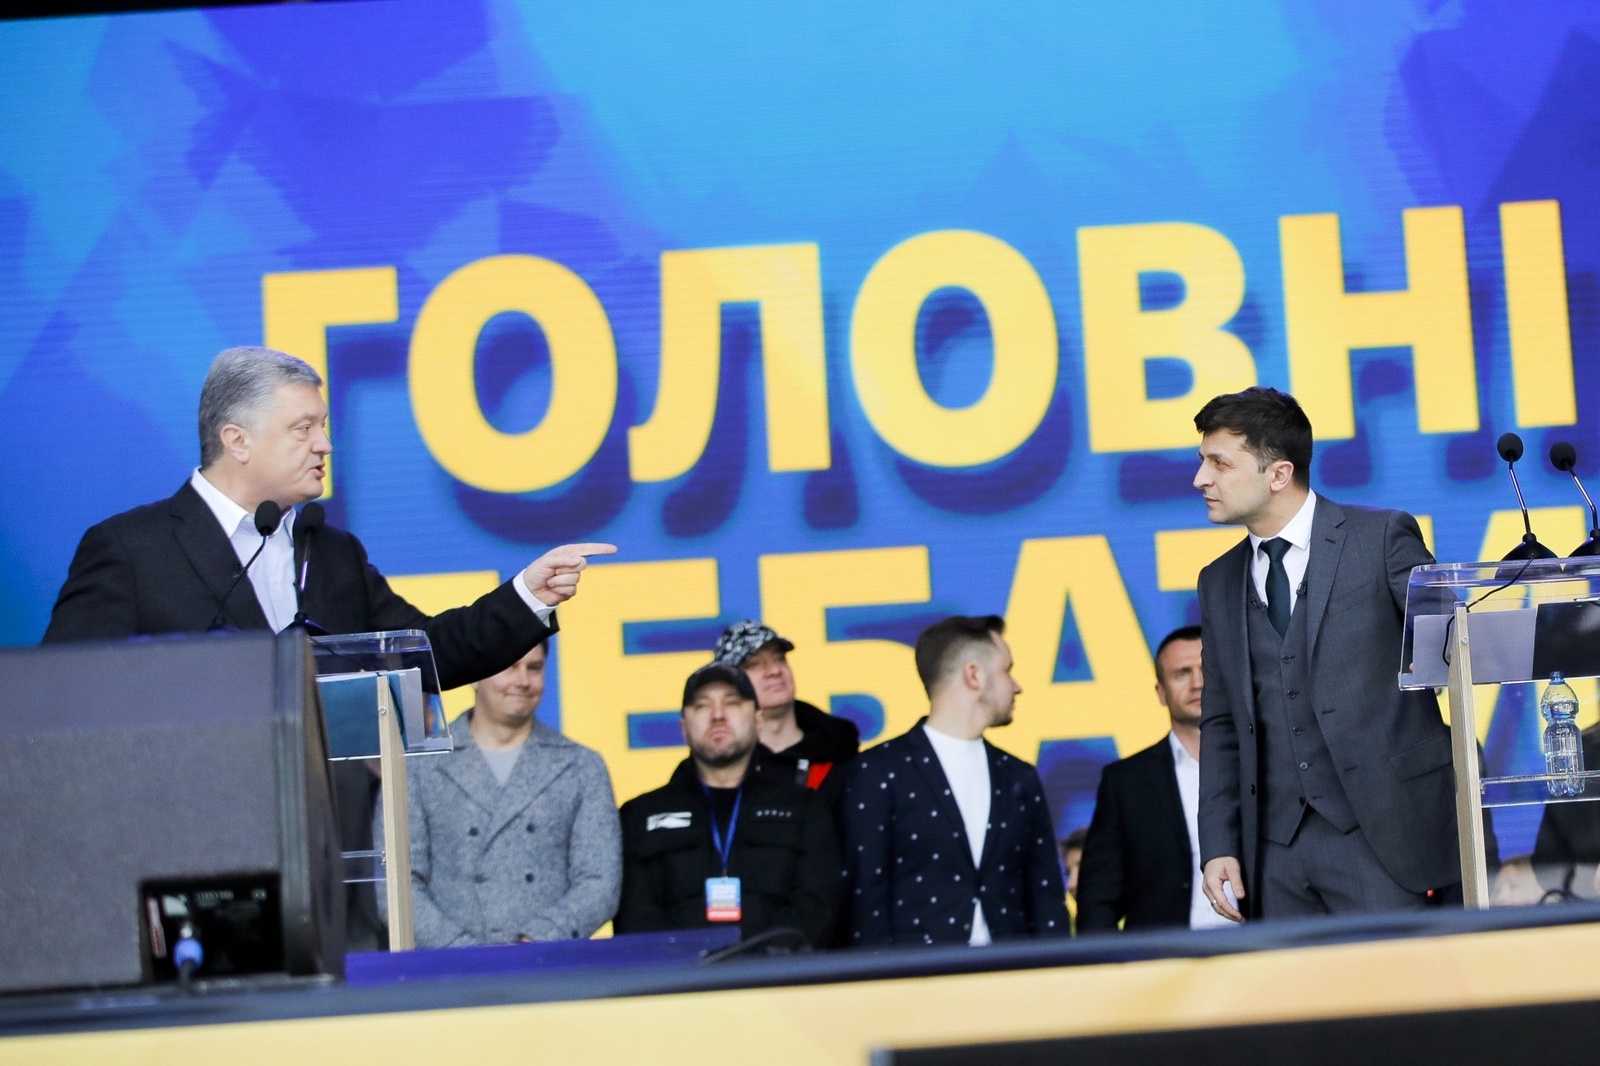 Ukrainas sittande president Petro Poroshenkoi en debatt med utmanaren Volodymyr Zelenskyj i fredags. Foto: AP Photo/Vadim Ghirda